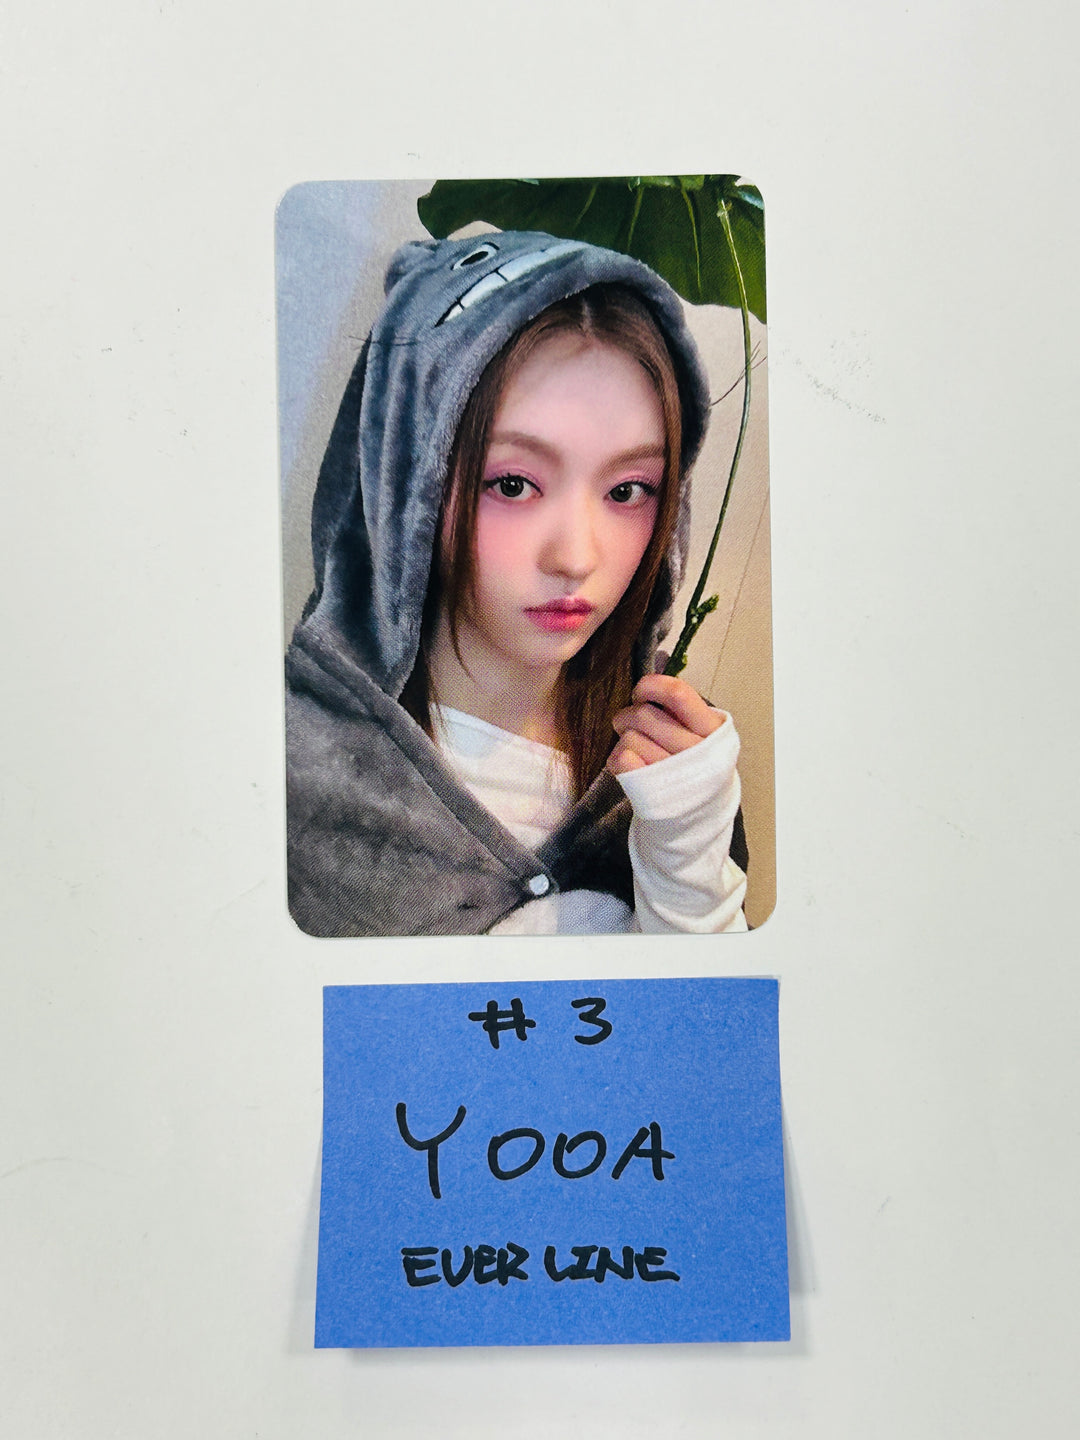 YOOA (Of Oh My Girl) "Borderline" - Everline Fansign Event Photocard [Poca Ver.] [24.4.22]